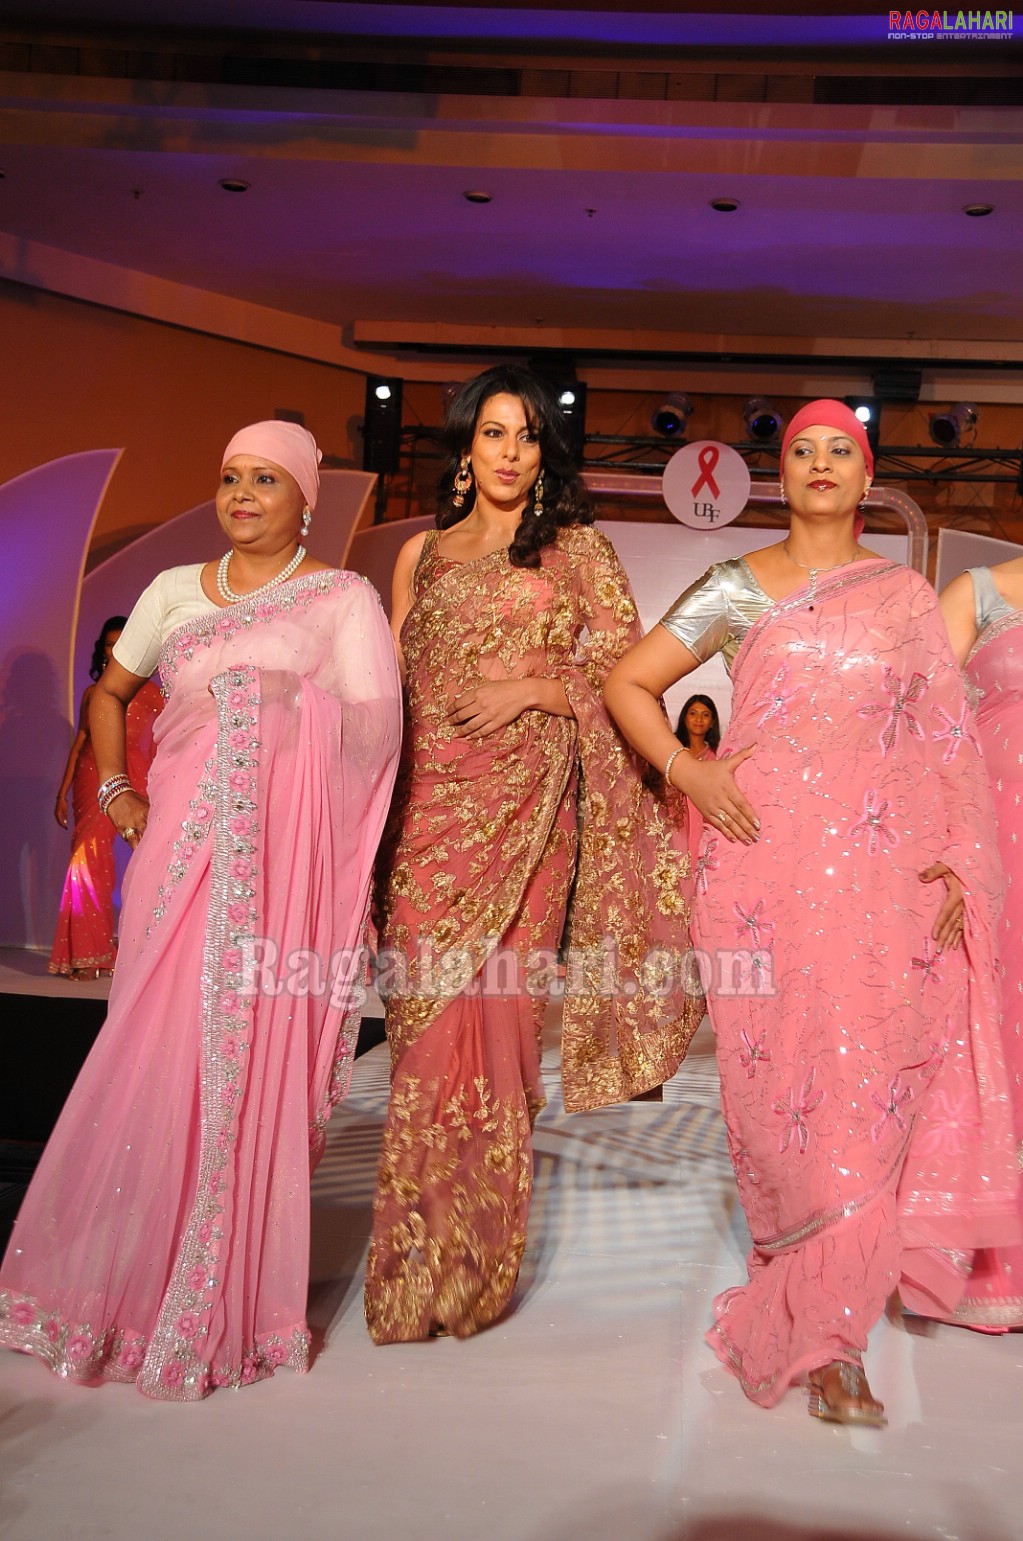 Amala, Shilpa Reddy walks on the Ramp for KIMS-The Pink Ribbon Awards Night 2010